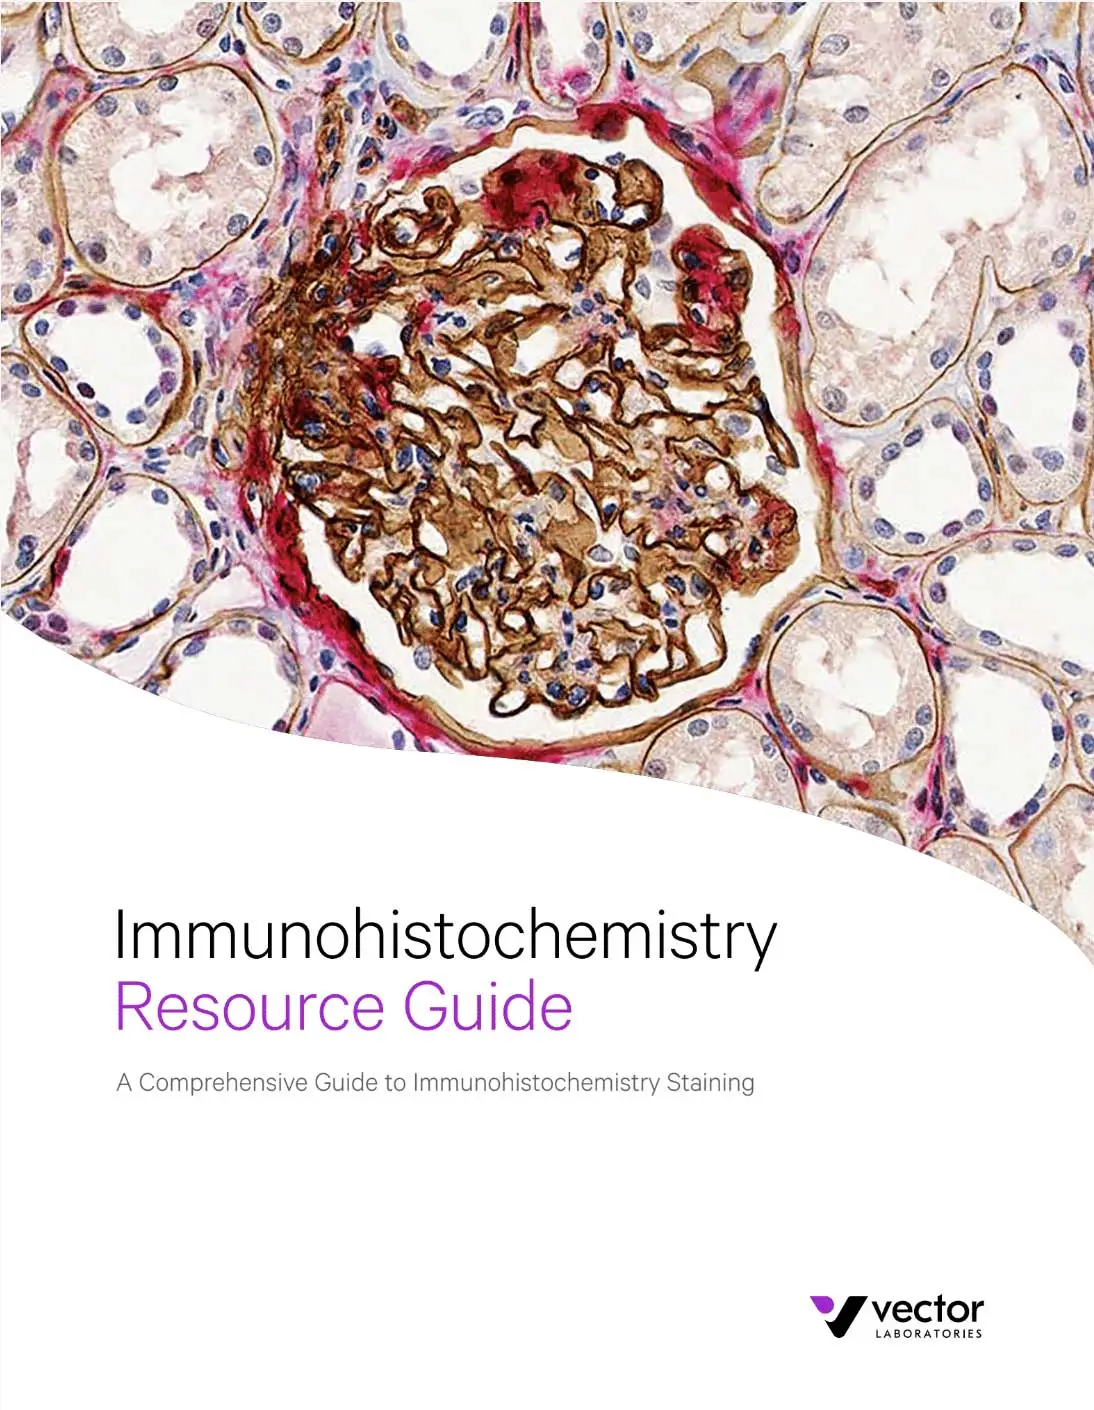 IHC Guide Cover v1